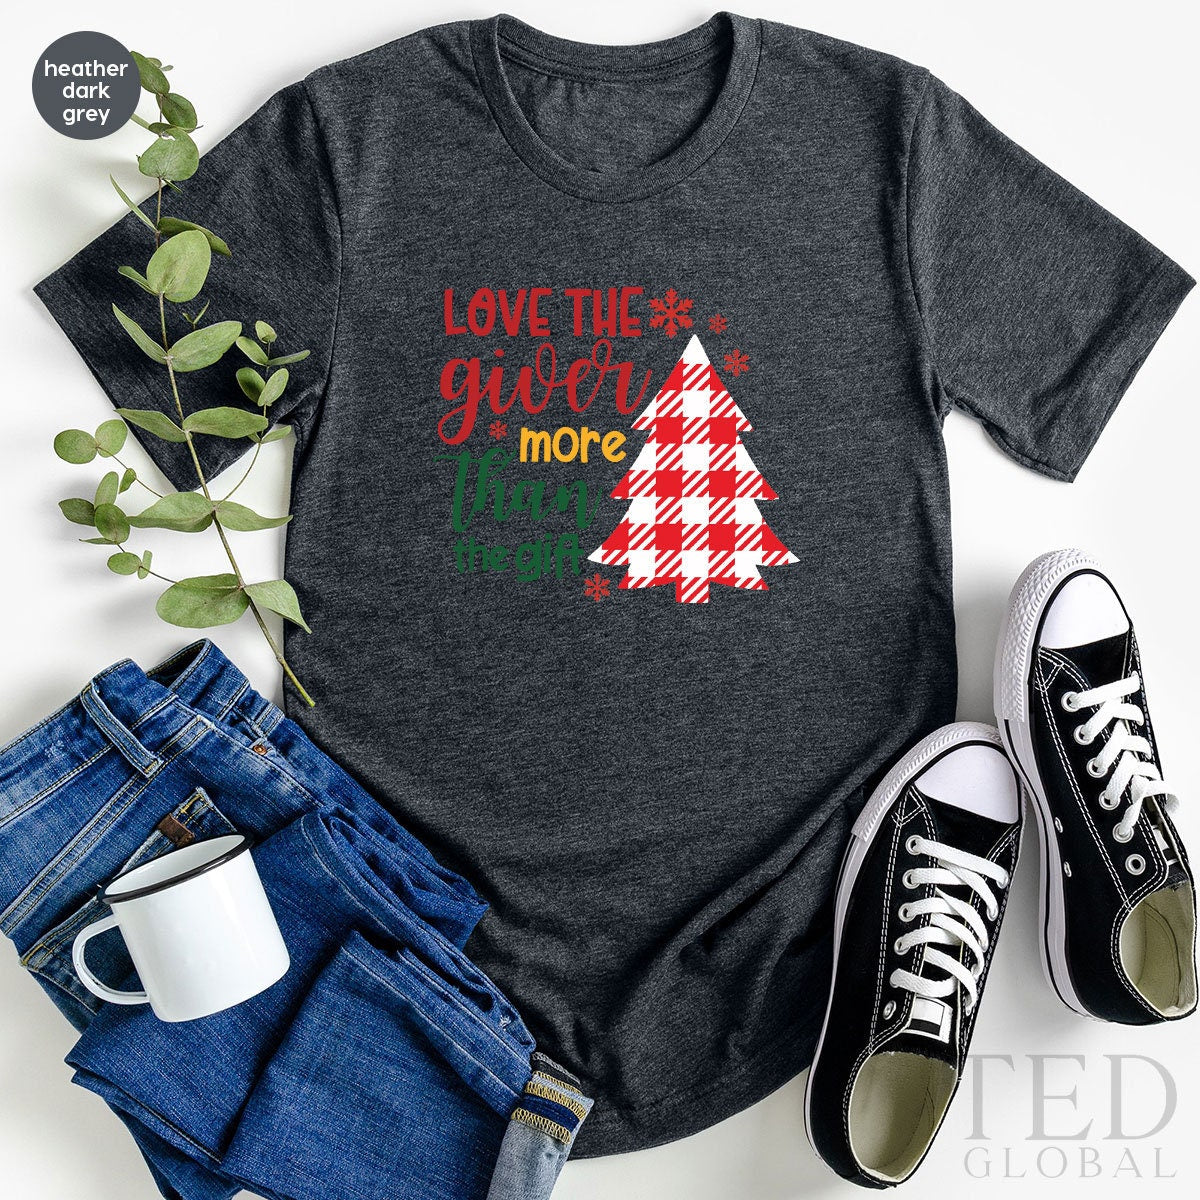 Cute Pajamas Christmas Tree T-Shirt, Love The Giver More Than The Gift T Shirt, Family Christmas Shirts, Holiday Shirt, Gift For Christmas - Fastdeliverytees.com